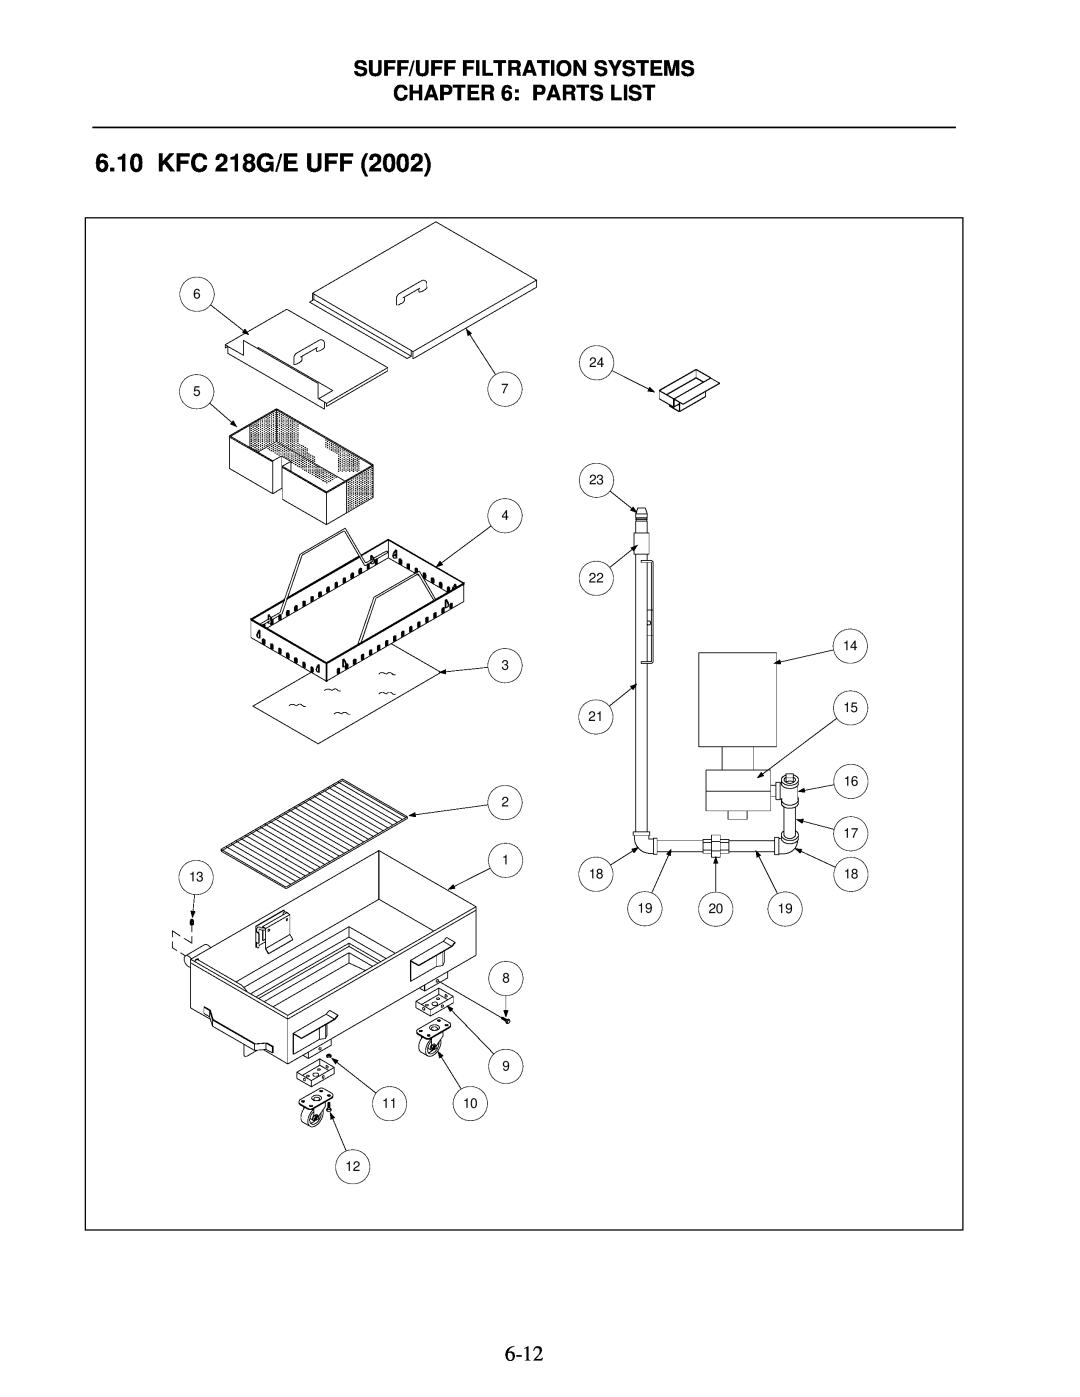 Frymaster 8195809 operation manual KFC 218G/E UFF, Suff/Uff Filtration Systems Parts List 